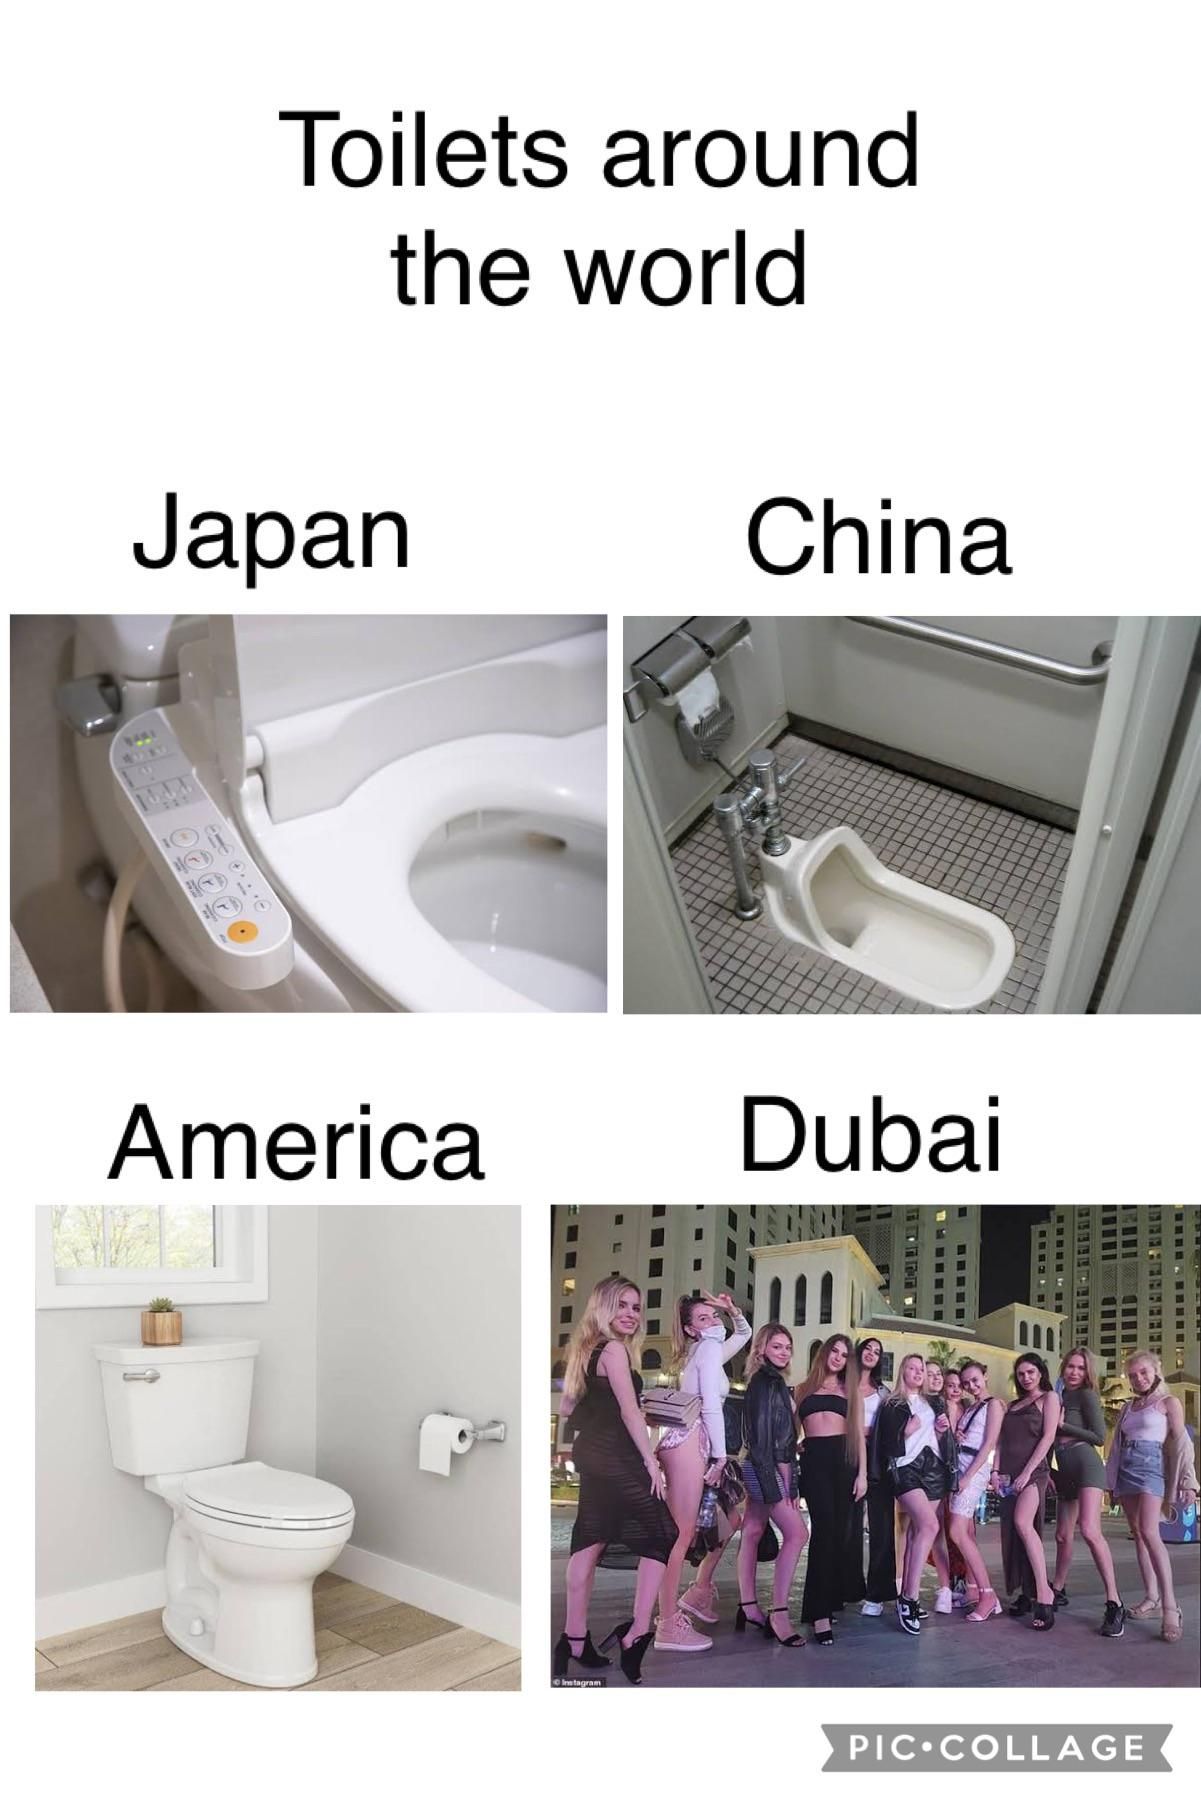 Dubai porta potty meme